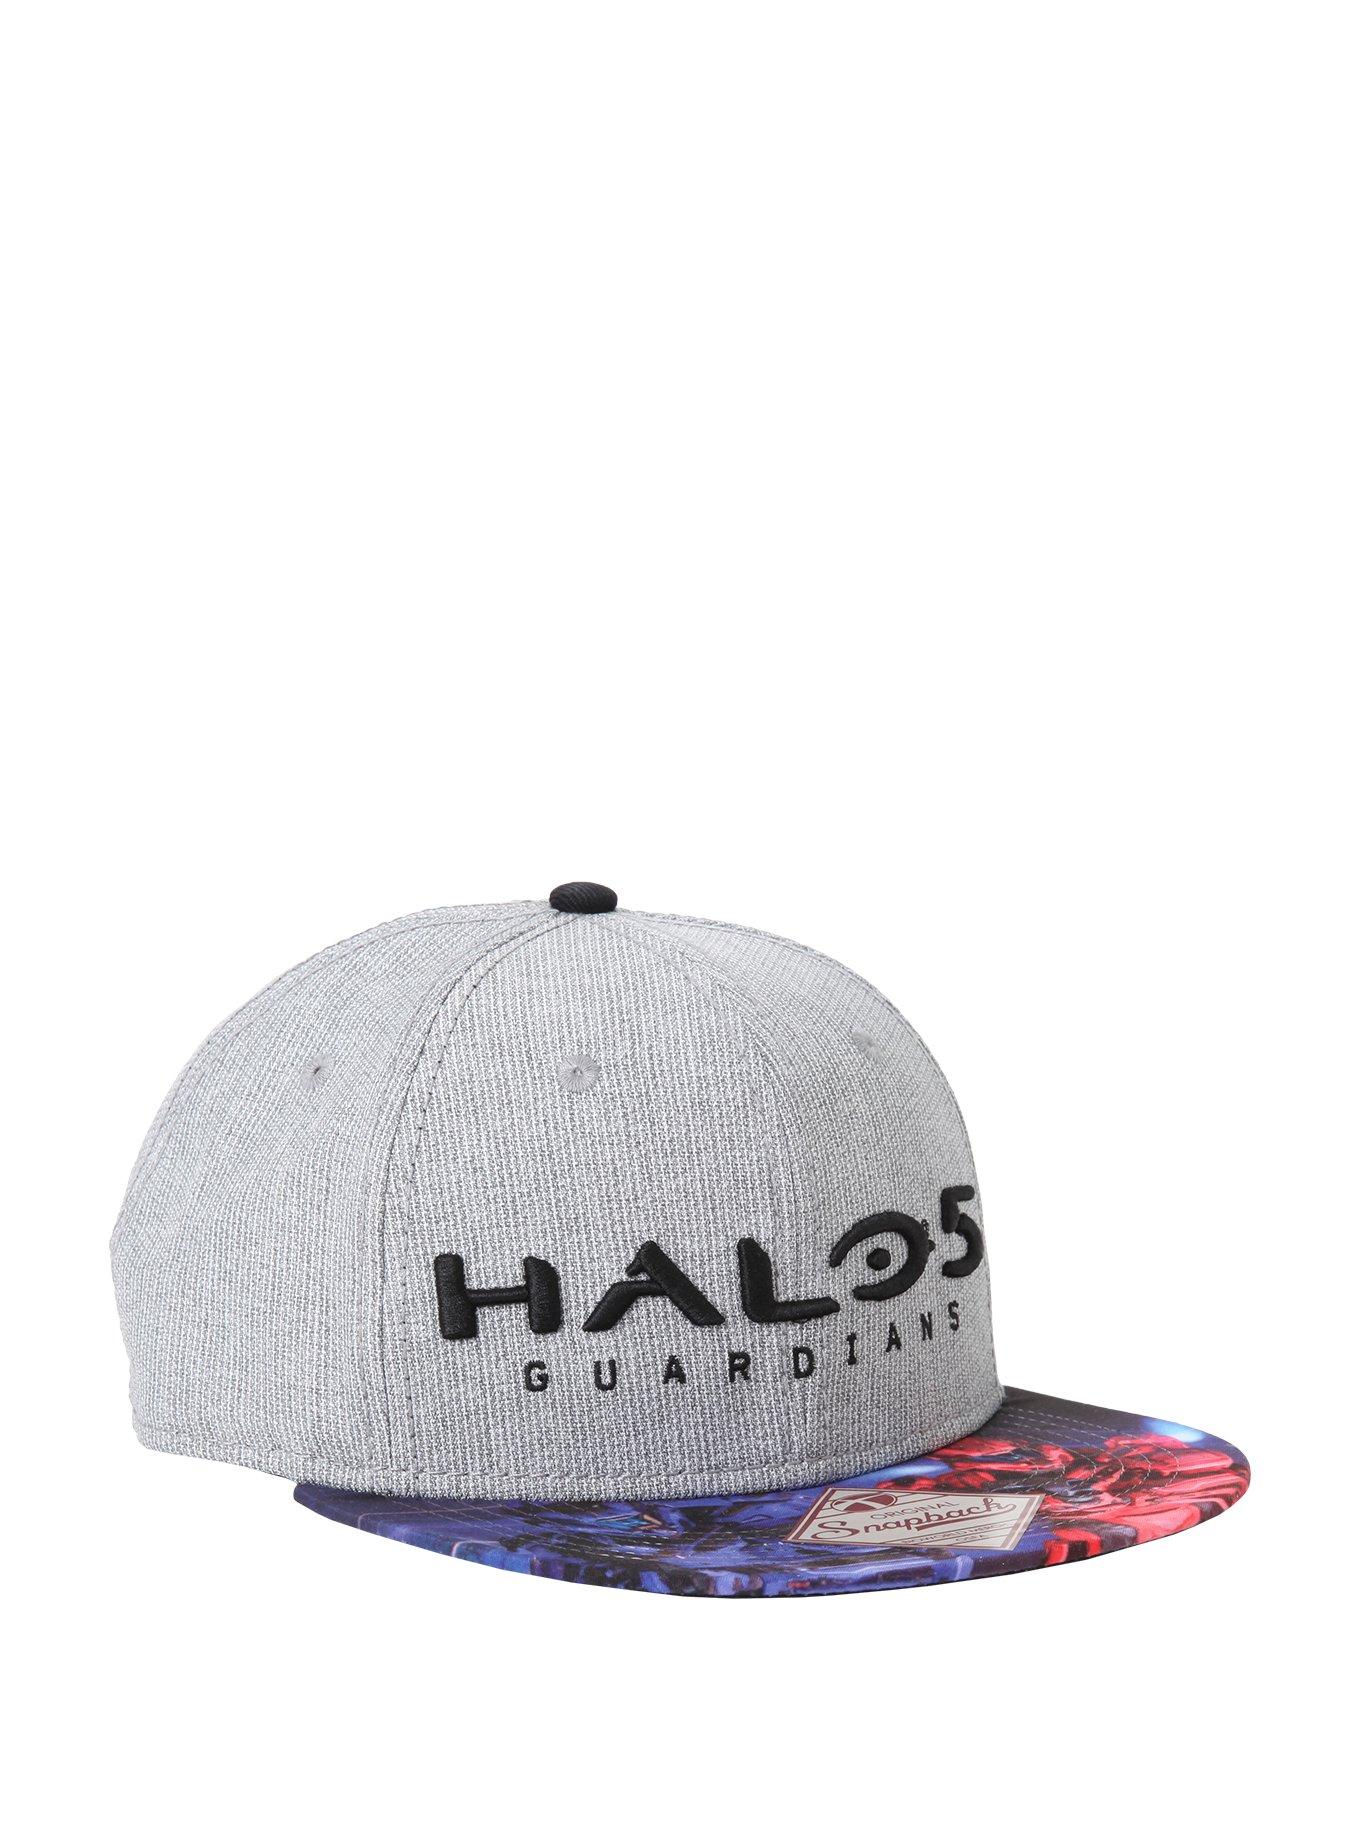 Halo 5: Guardians Snapback Hat | Hot Topic